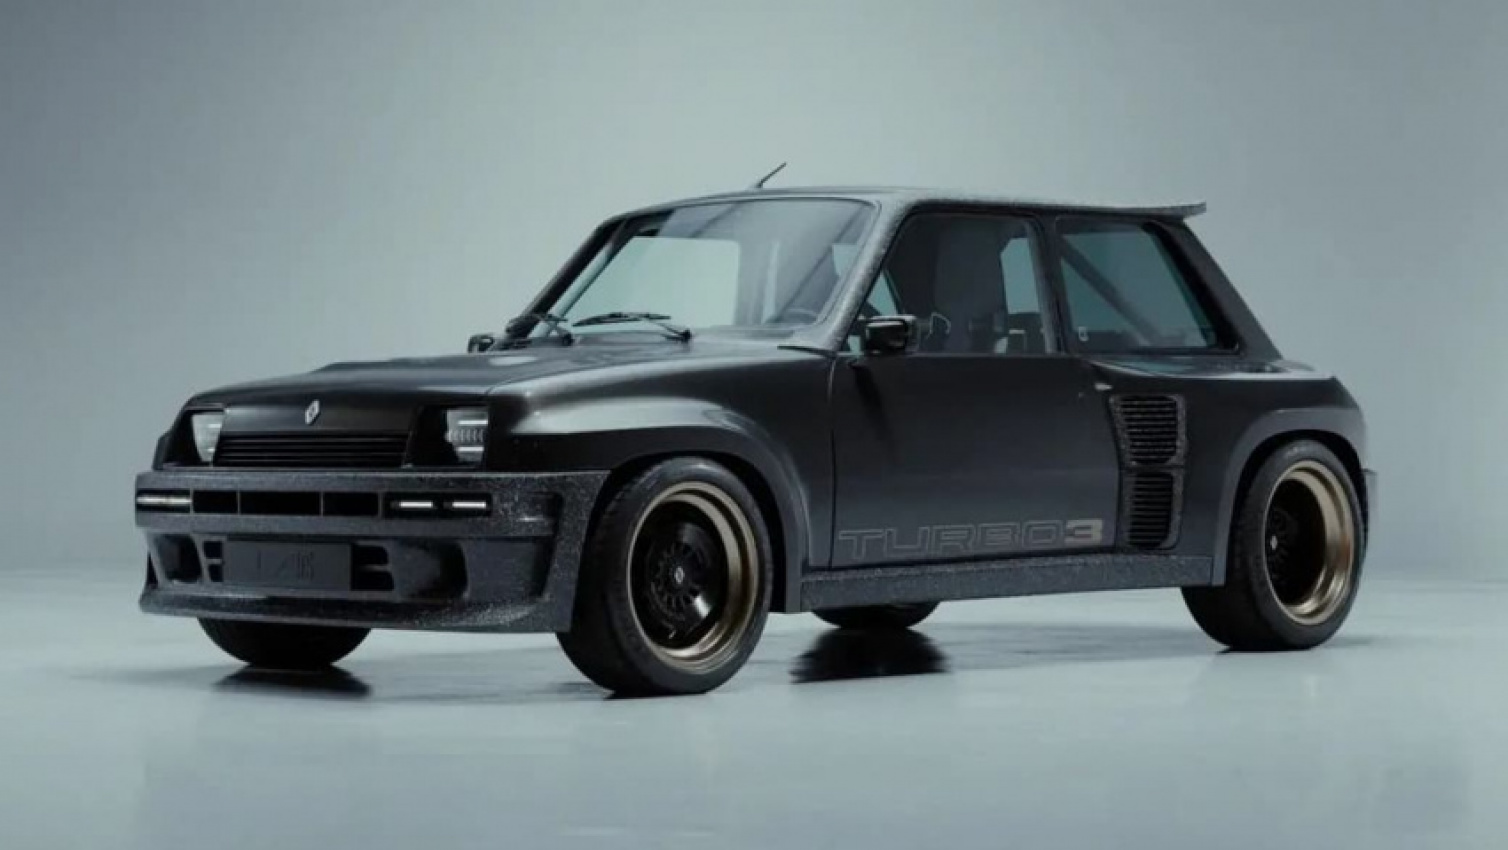 autos, cars, renault, retro, check out legende automobiles’ black edition renault 5 turbo restomod